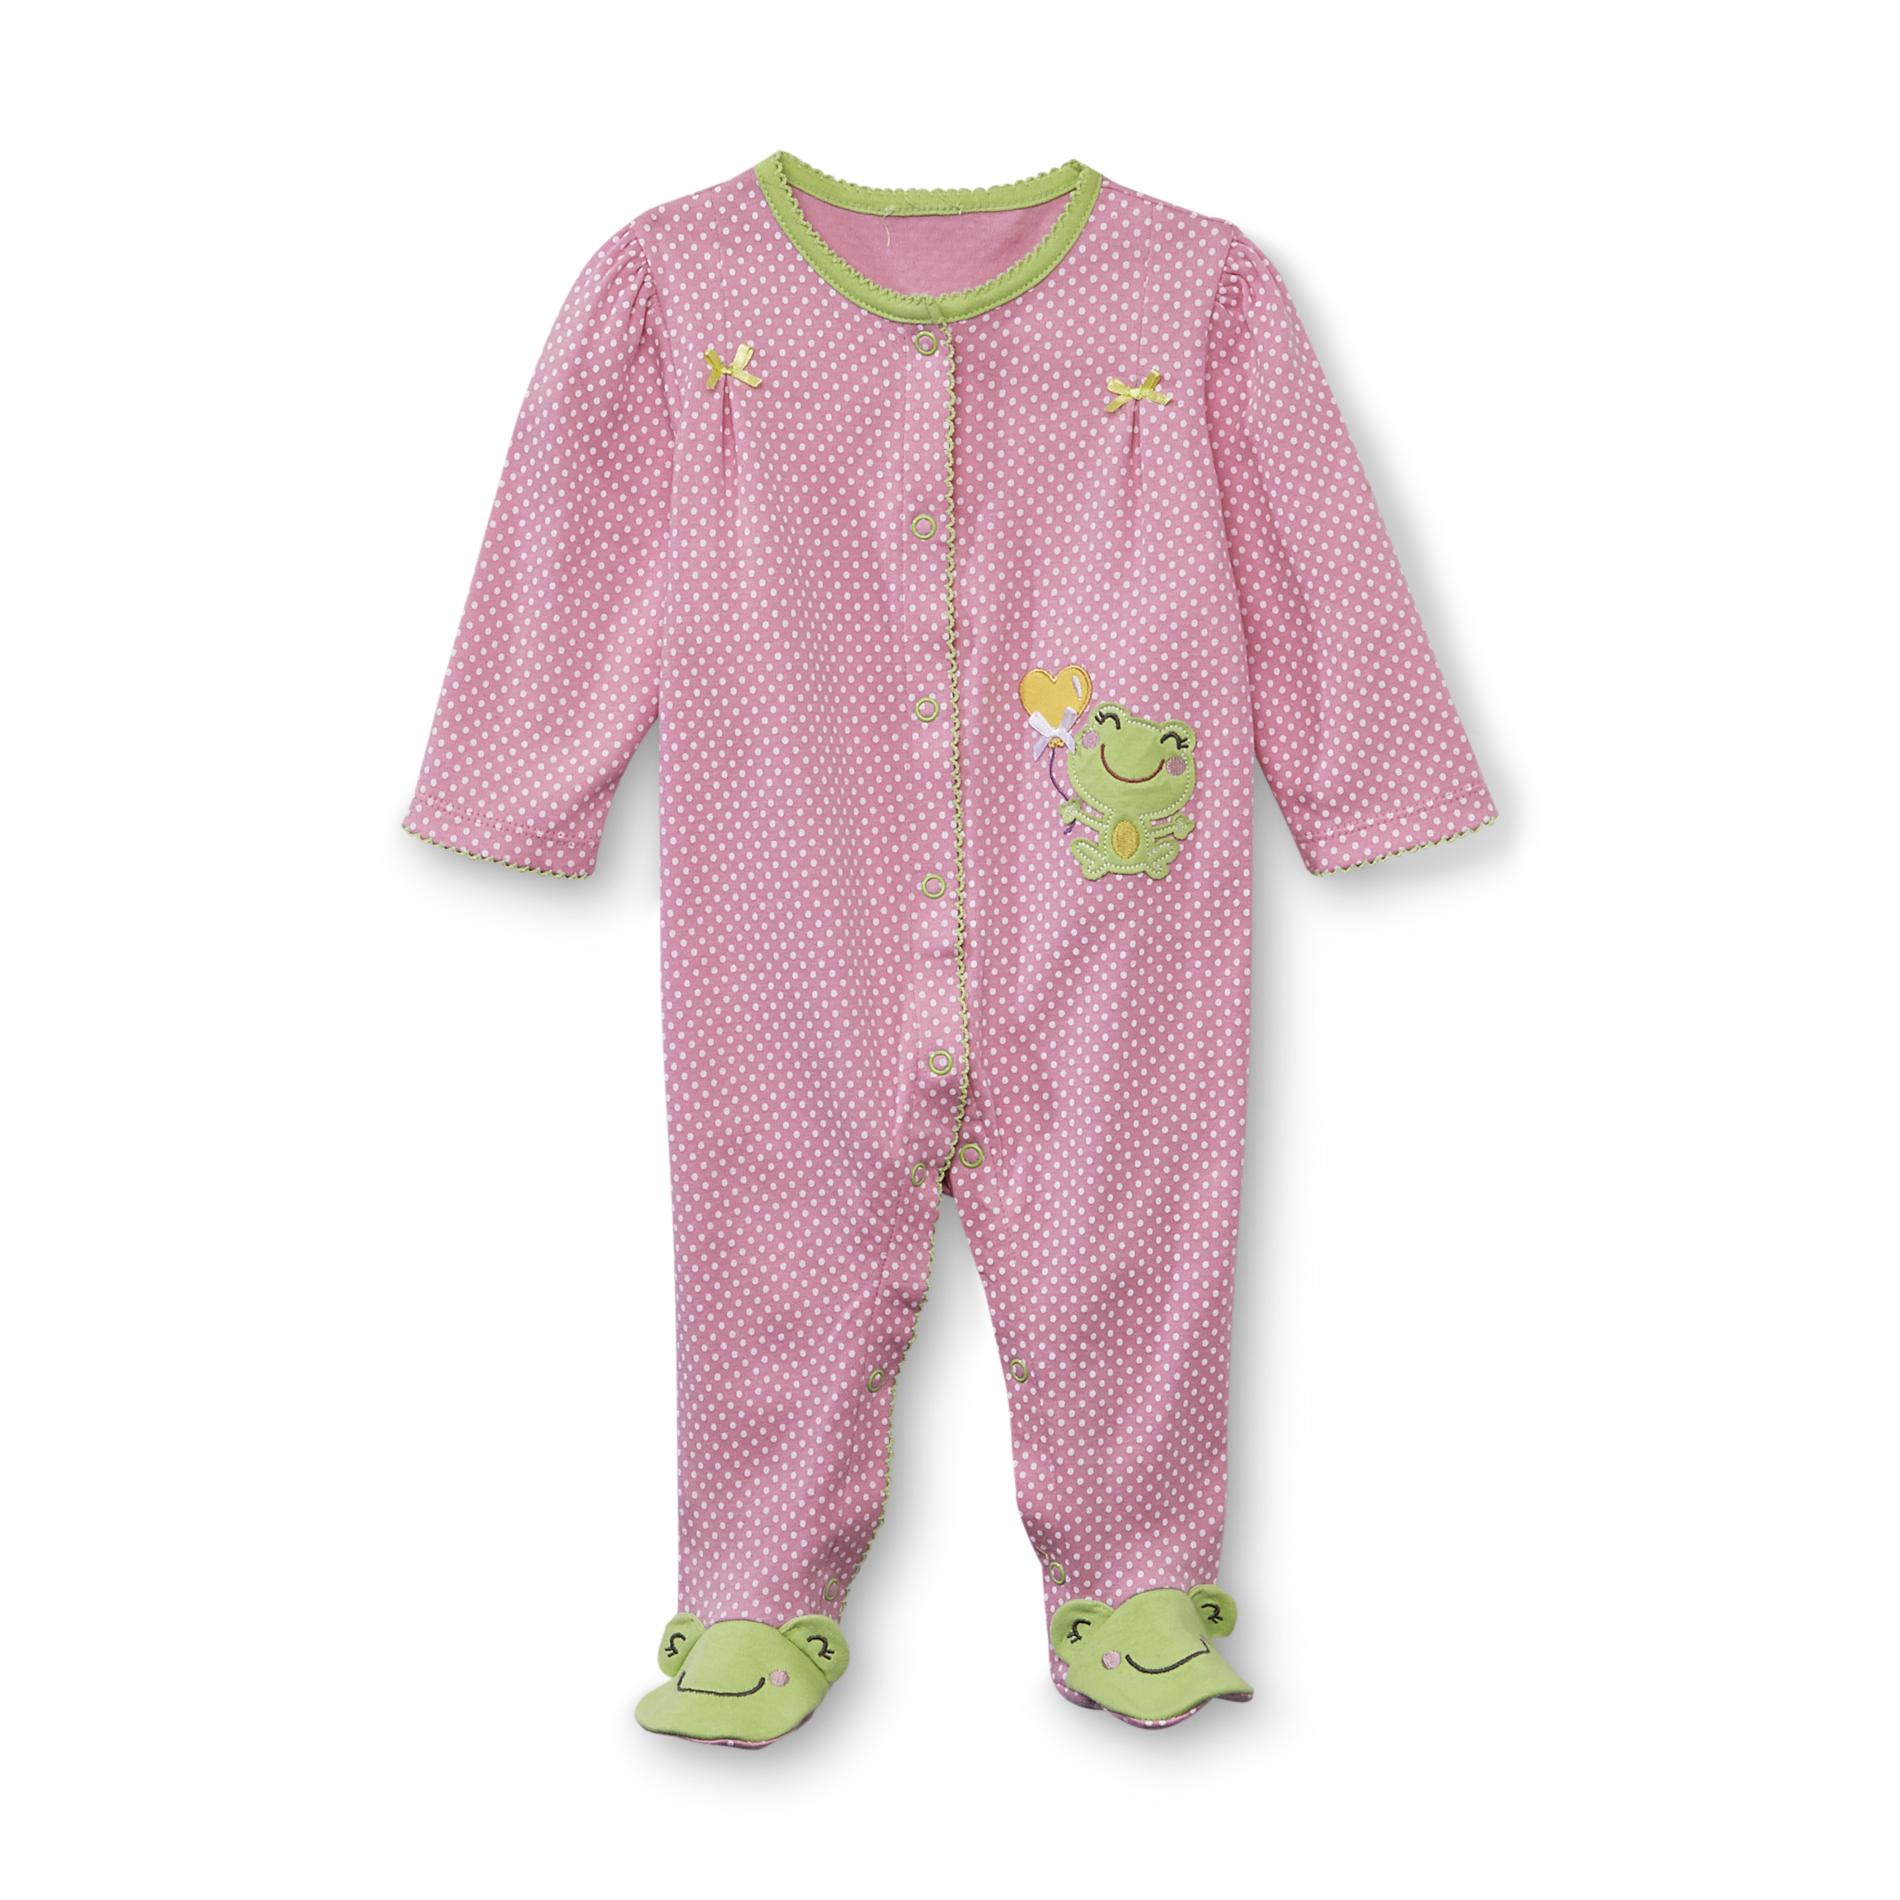 Small Wonders Newborn Girl's Bodysuit - Frogs & Polka Dots